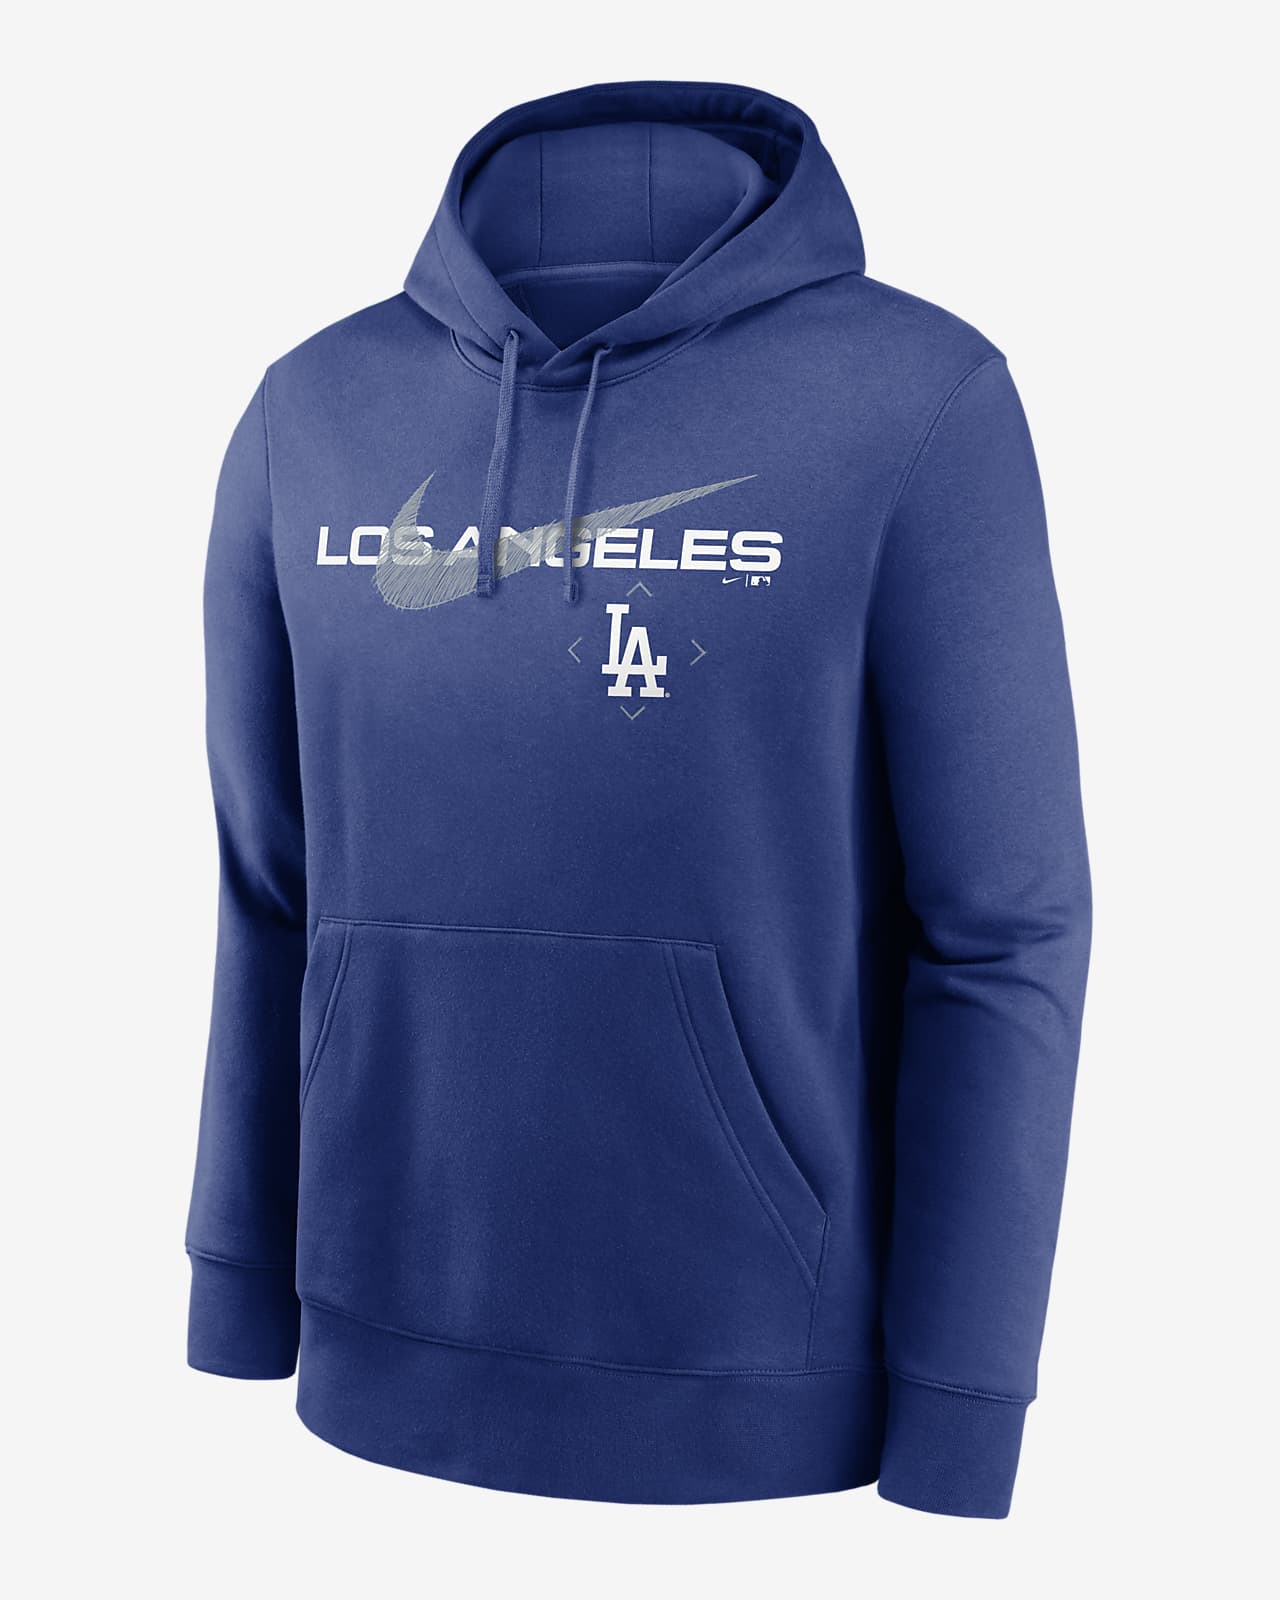 MLB Sweatshirt, MLB Hoodies, Fleece